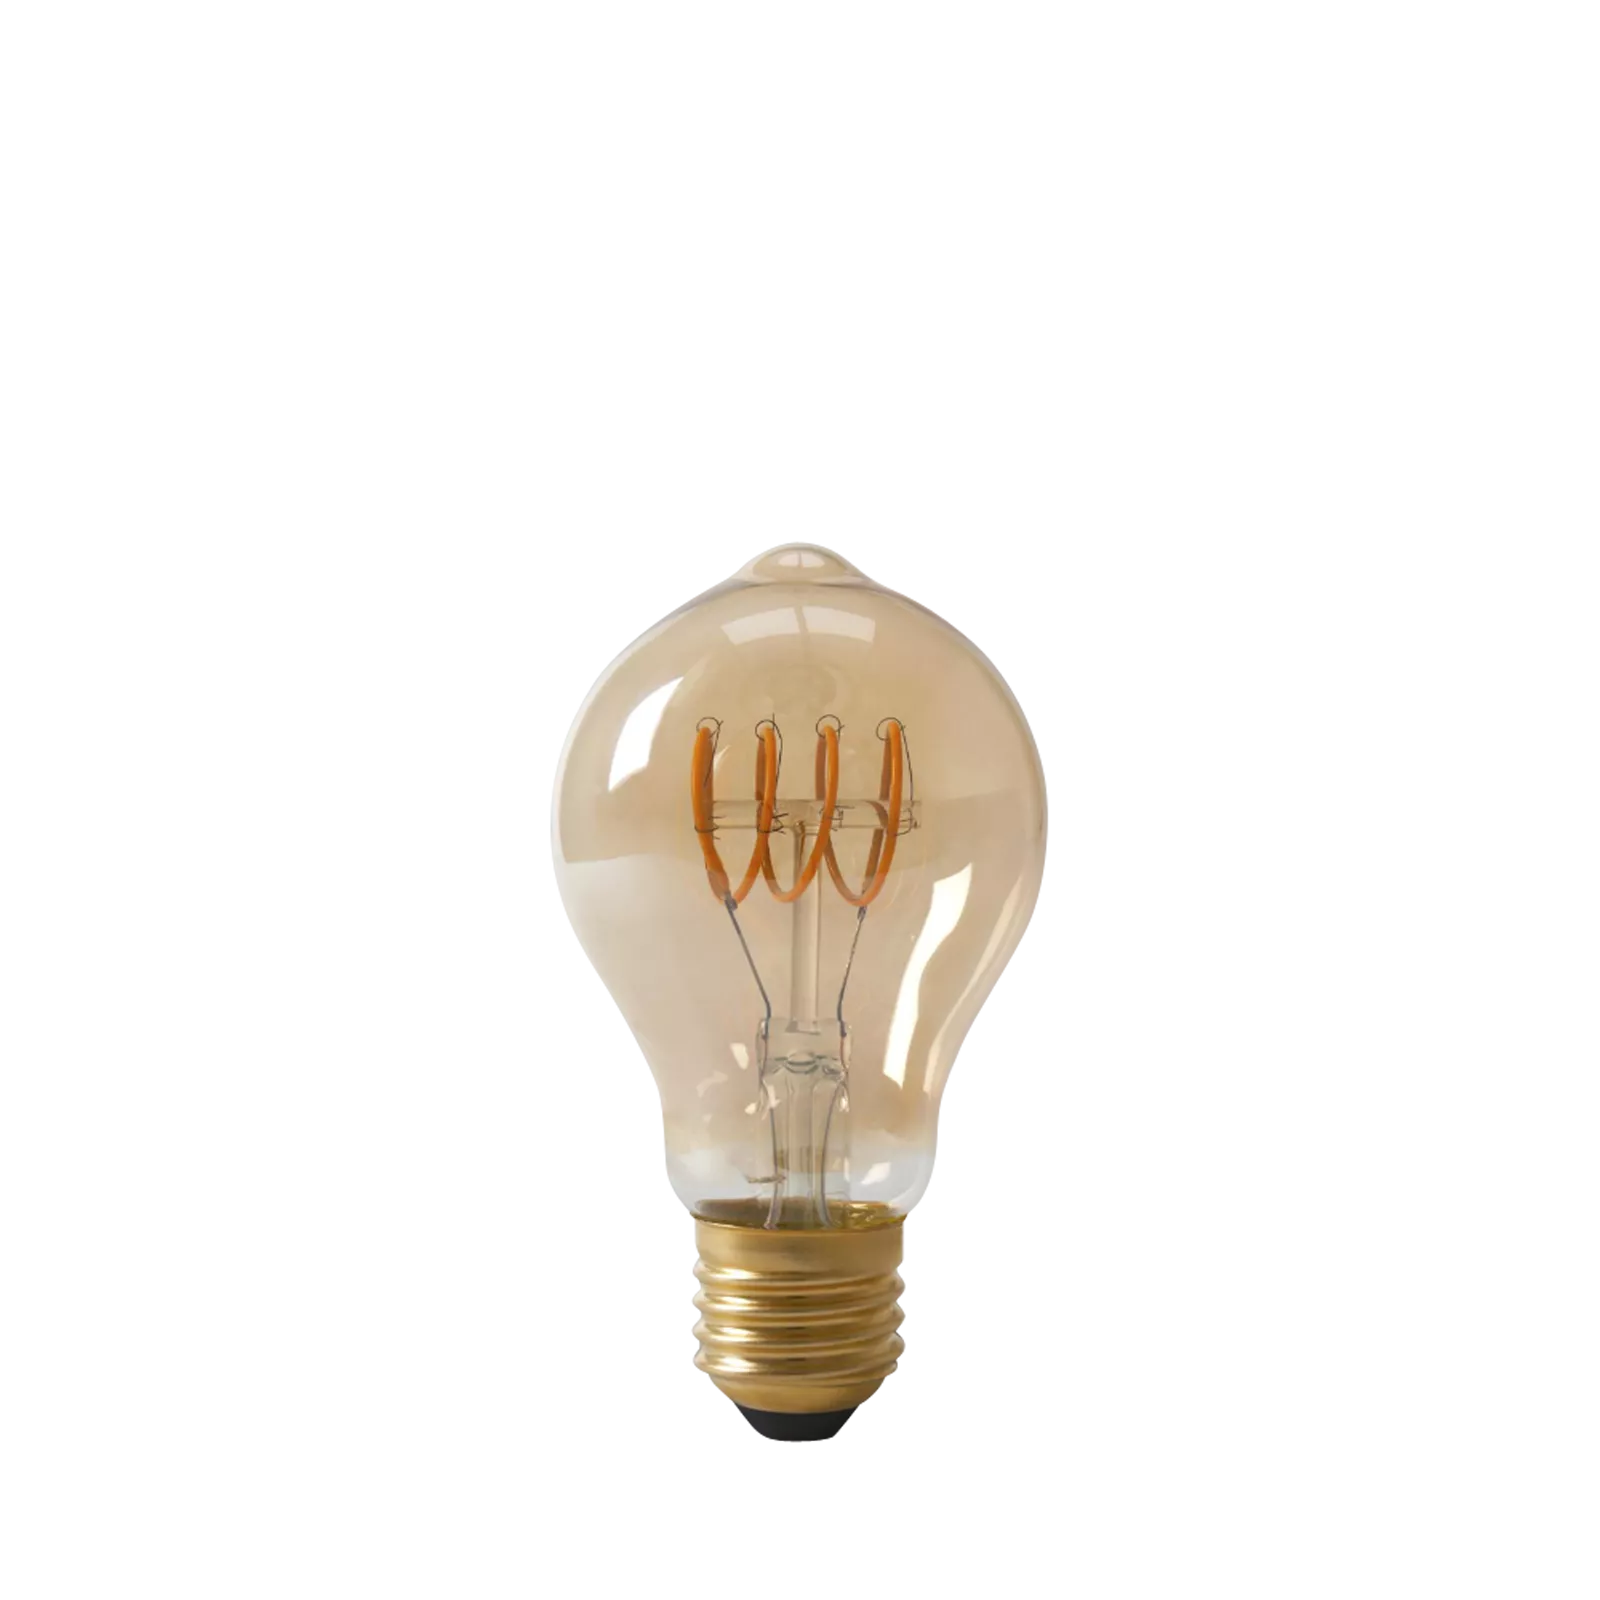 LED lamp Flex Standard - Gold